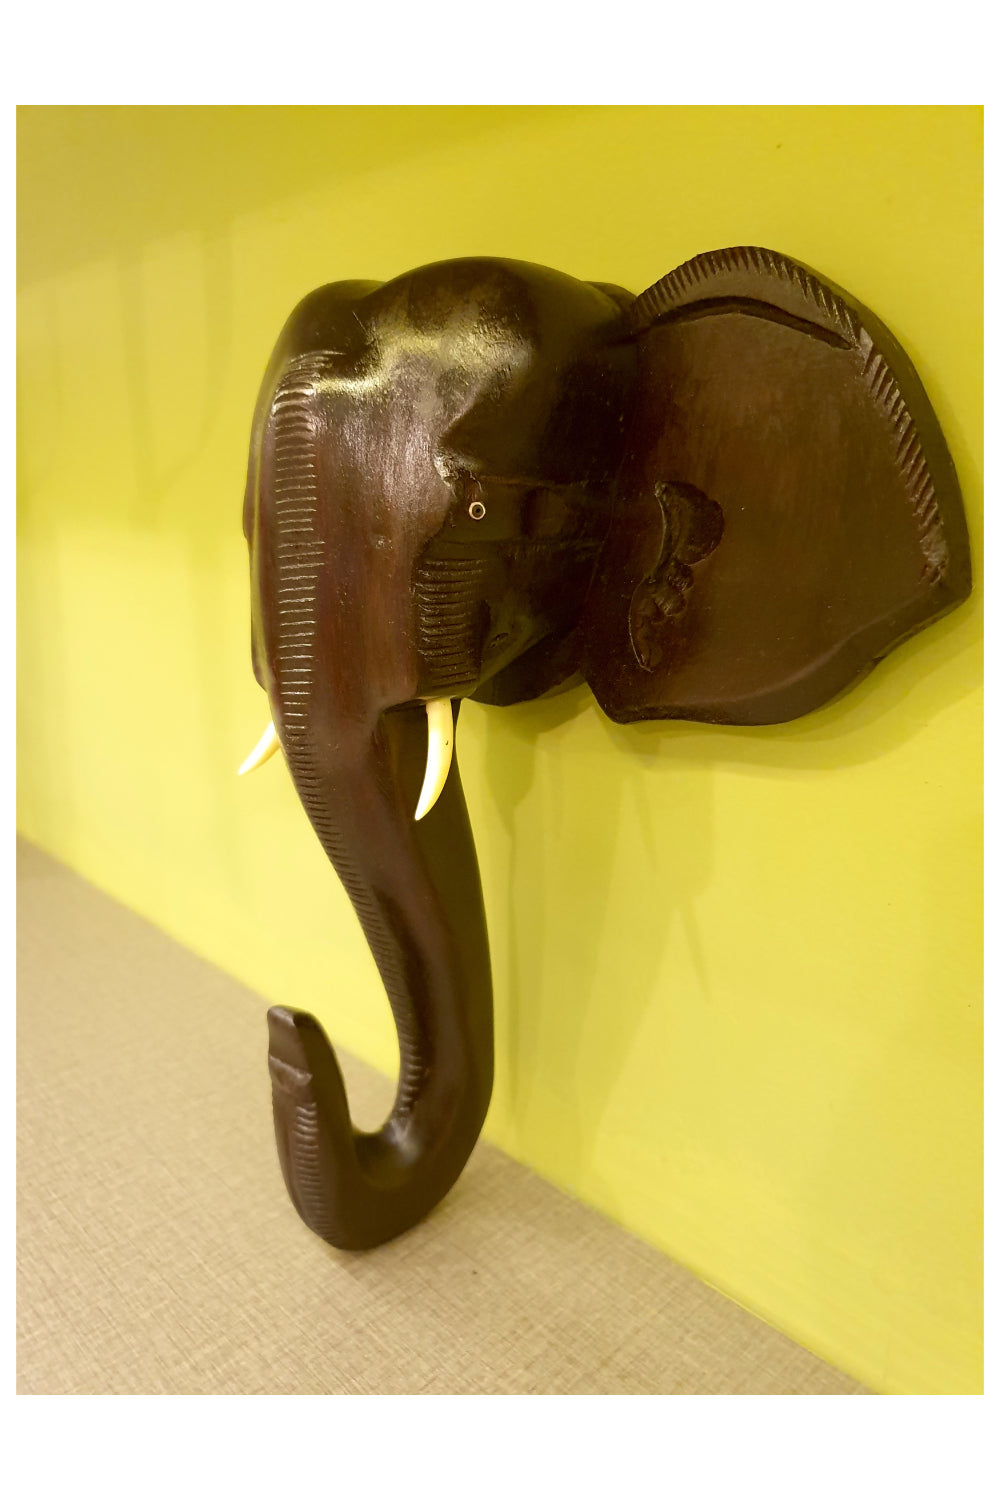 Southloom Handmade Elephant Head Handicraft (Carved from Mahogany Wood) 12 Inches